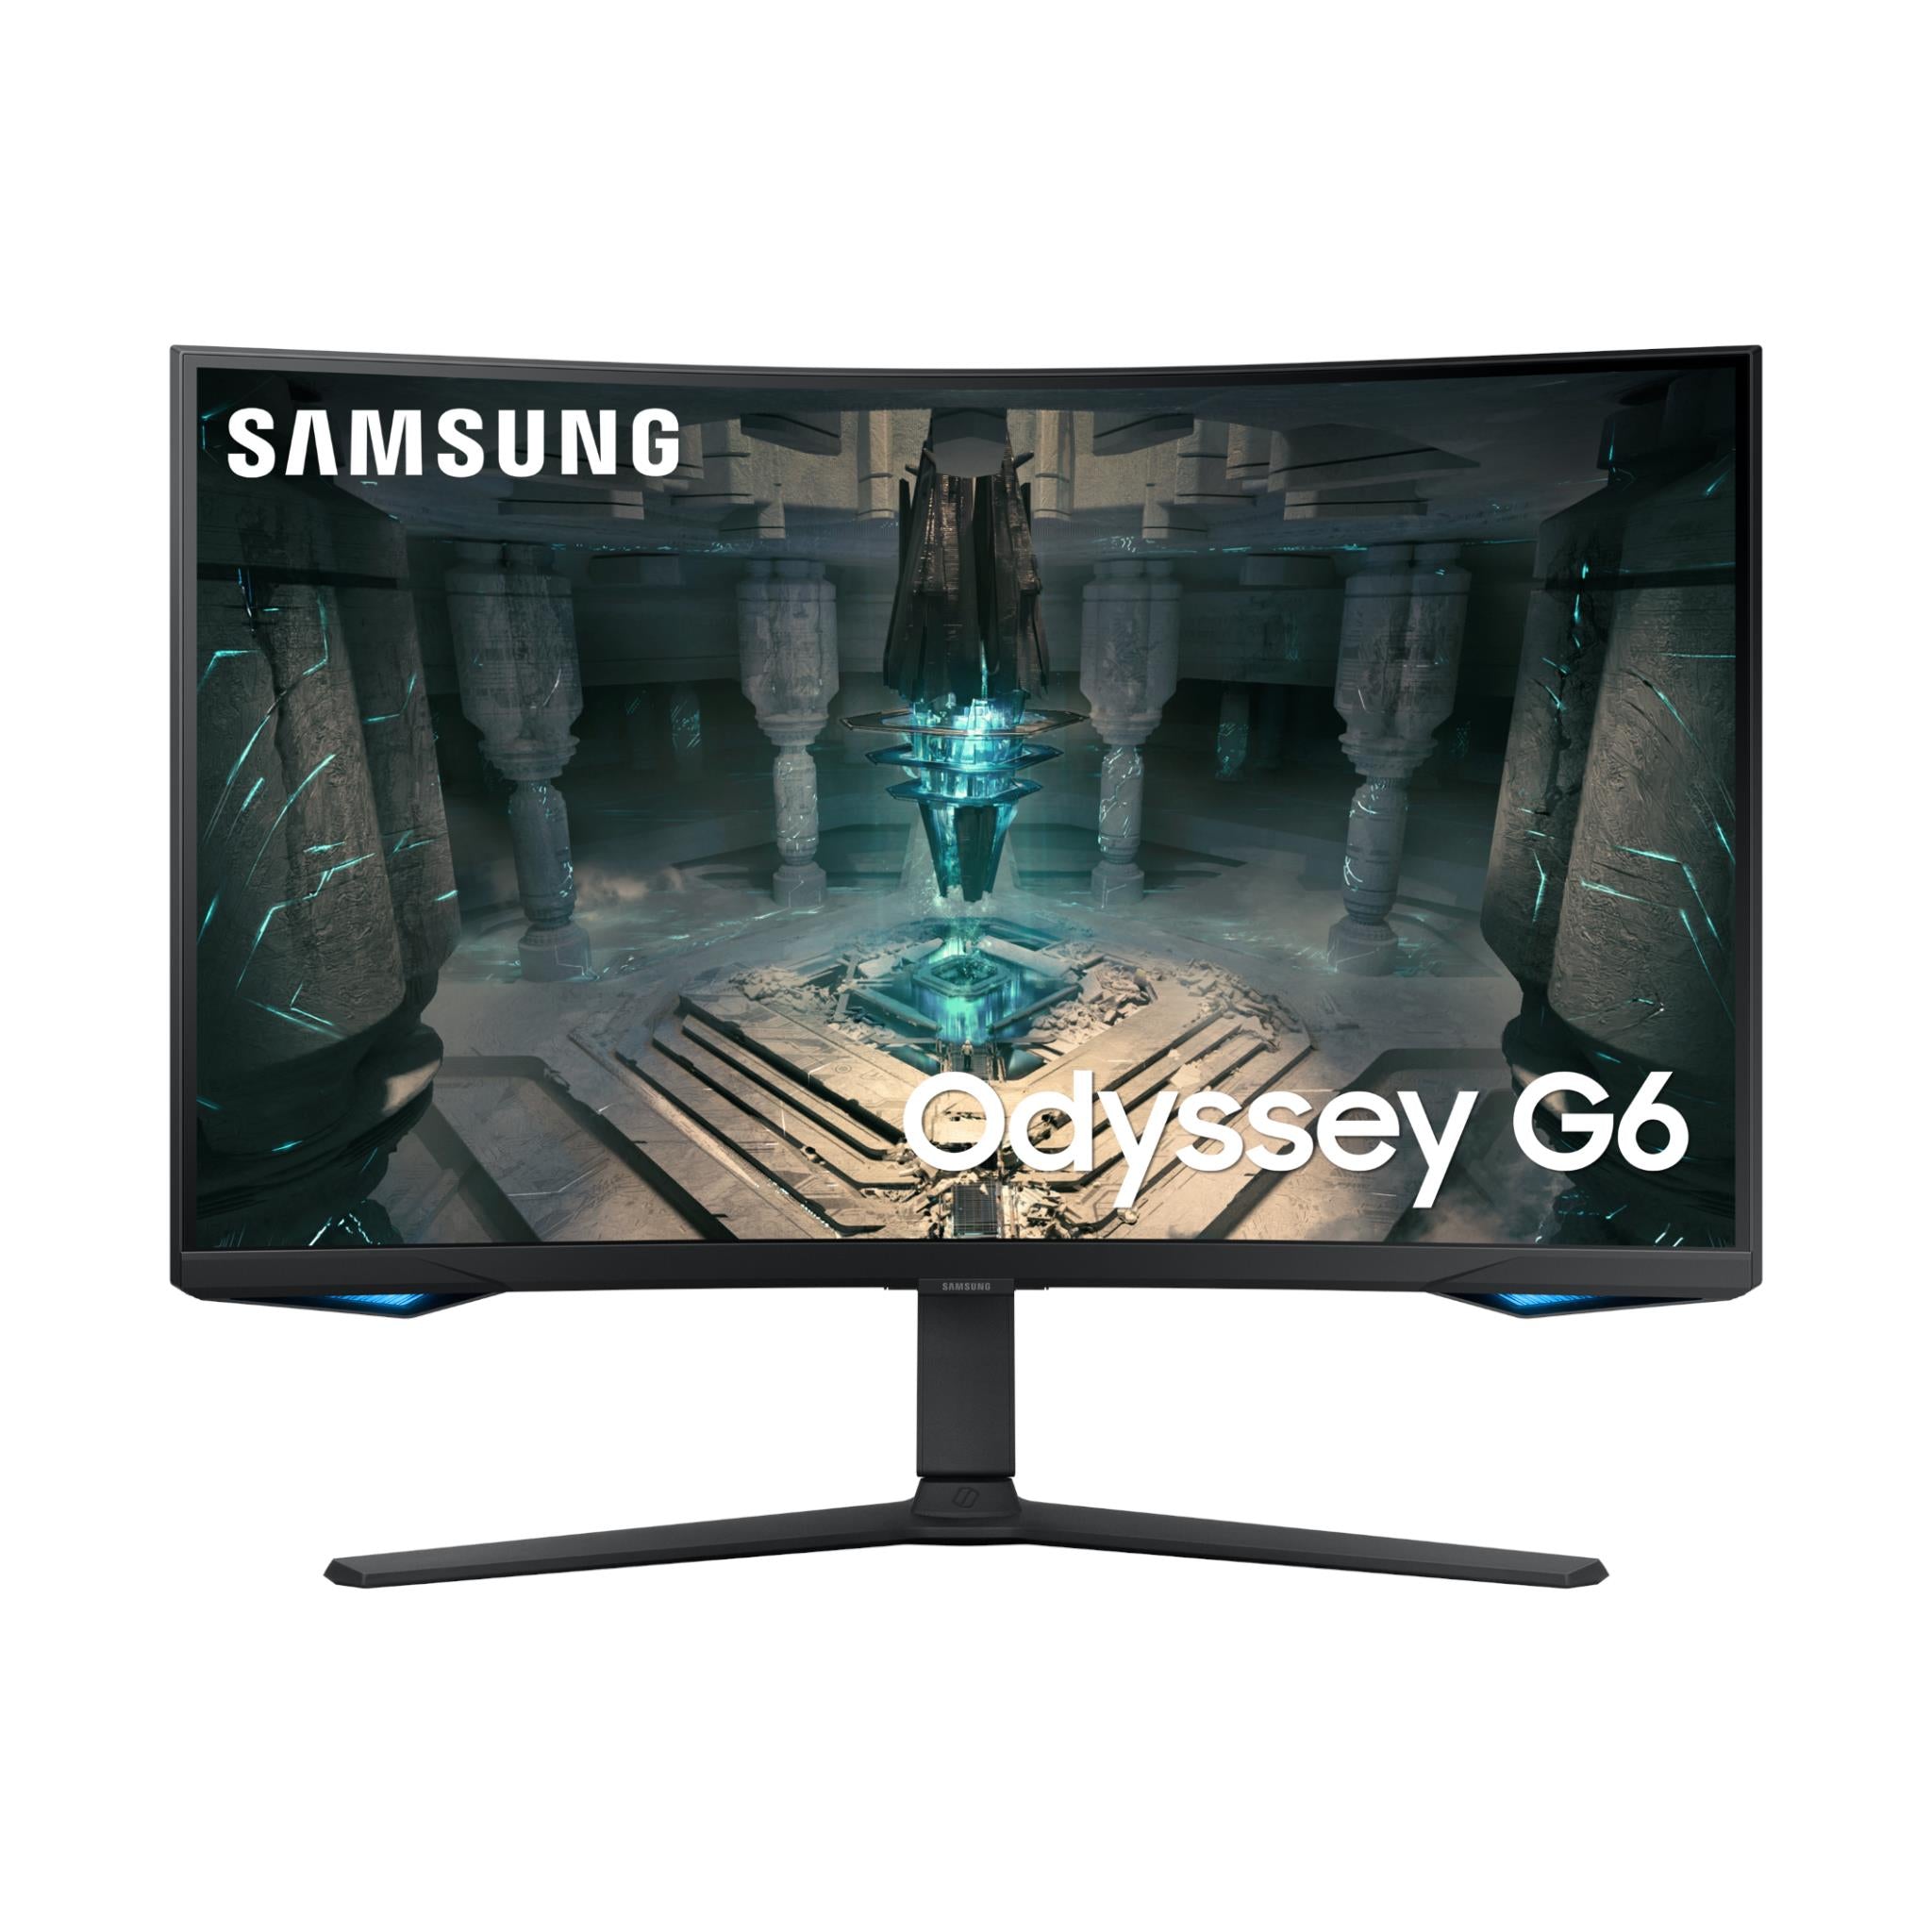 samsung odyssey g6 32" curved qhd gaming monitor [^refurbished]